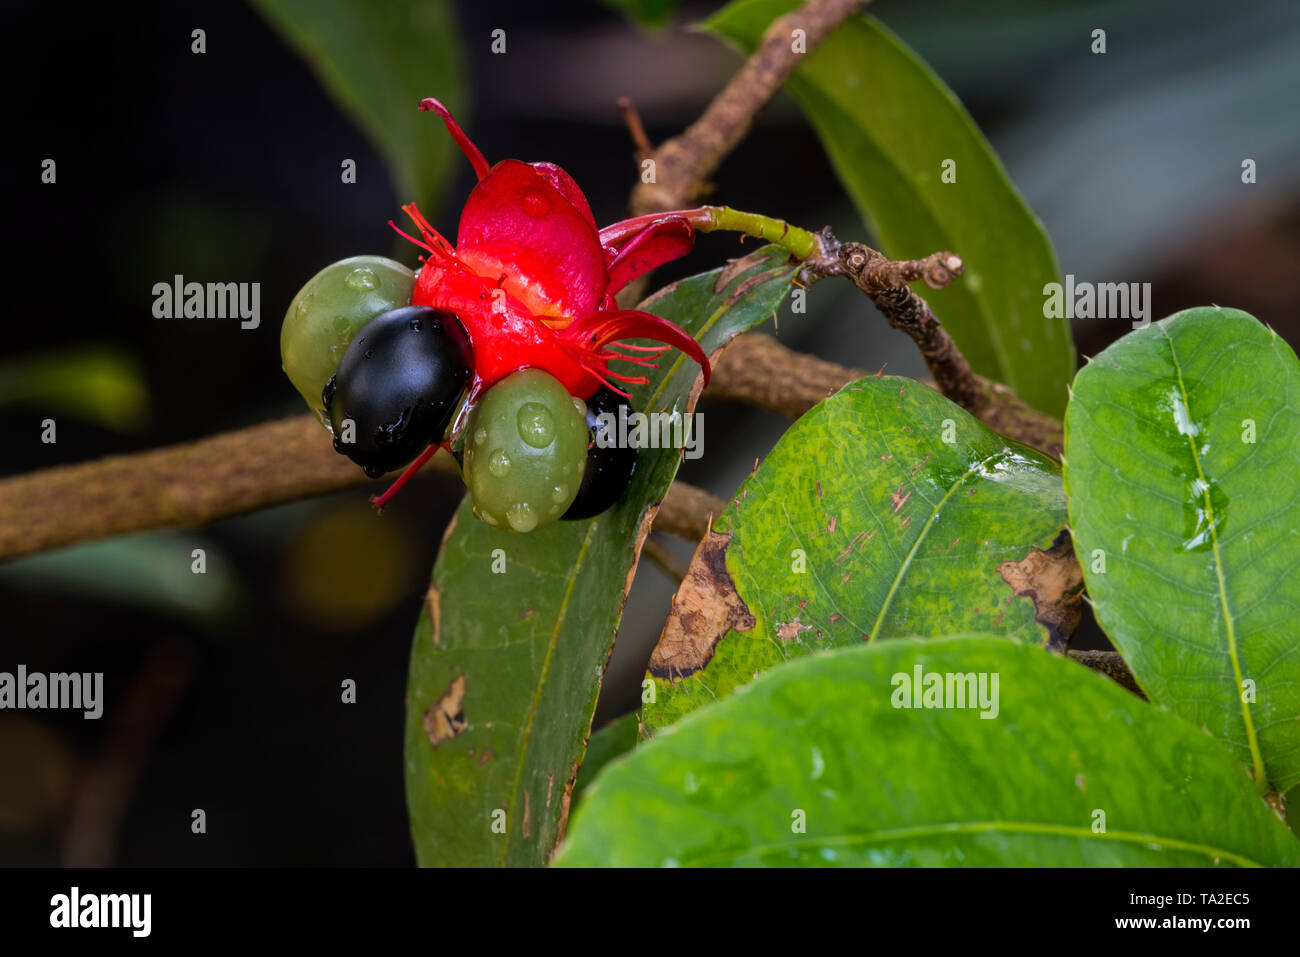 Mickey Mouse plant / Bird's eye bush (Ochna kirkii) showing drupelet fruit native to Tropical Africa Stock Photo